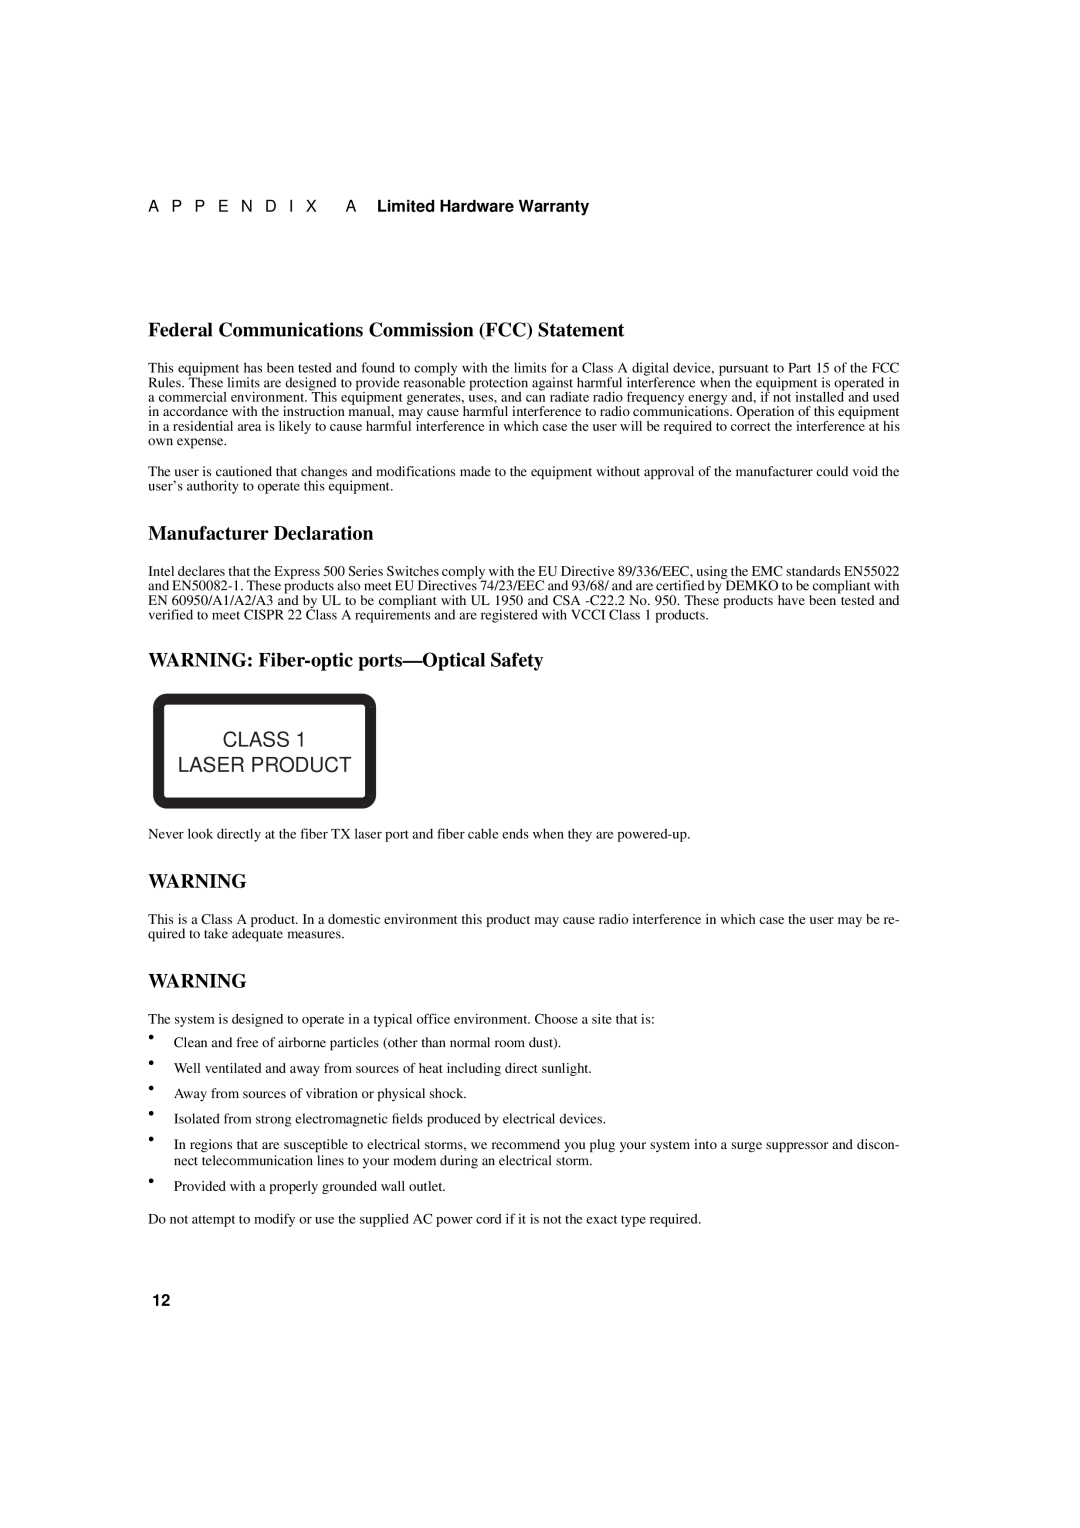 Intel 1000SX manual Federal Communications Commission FCC Statement, Manufacturer Declaration, Class Laser Product 